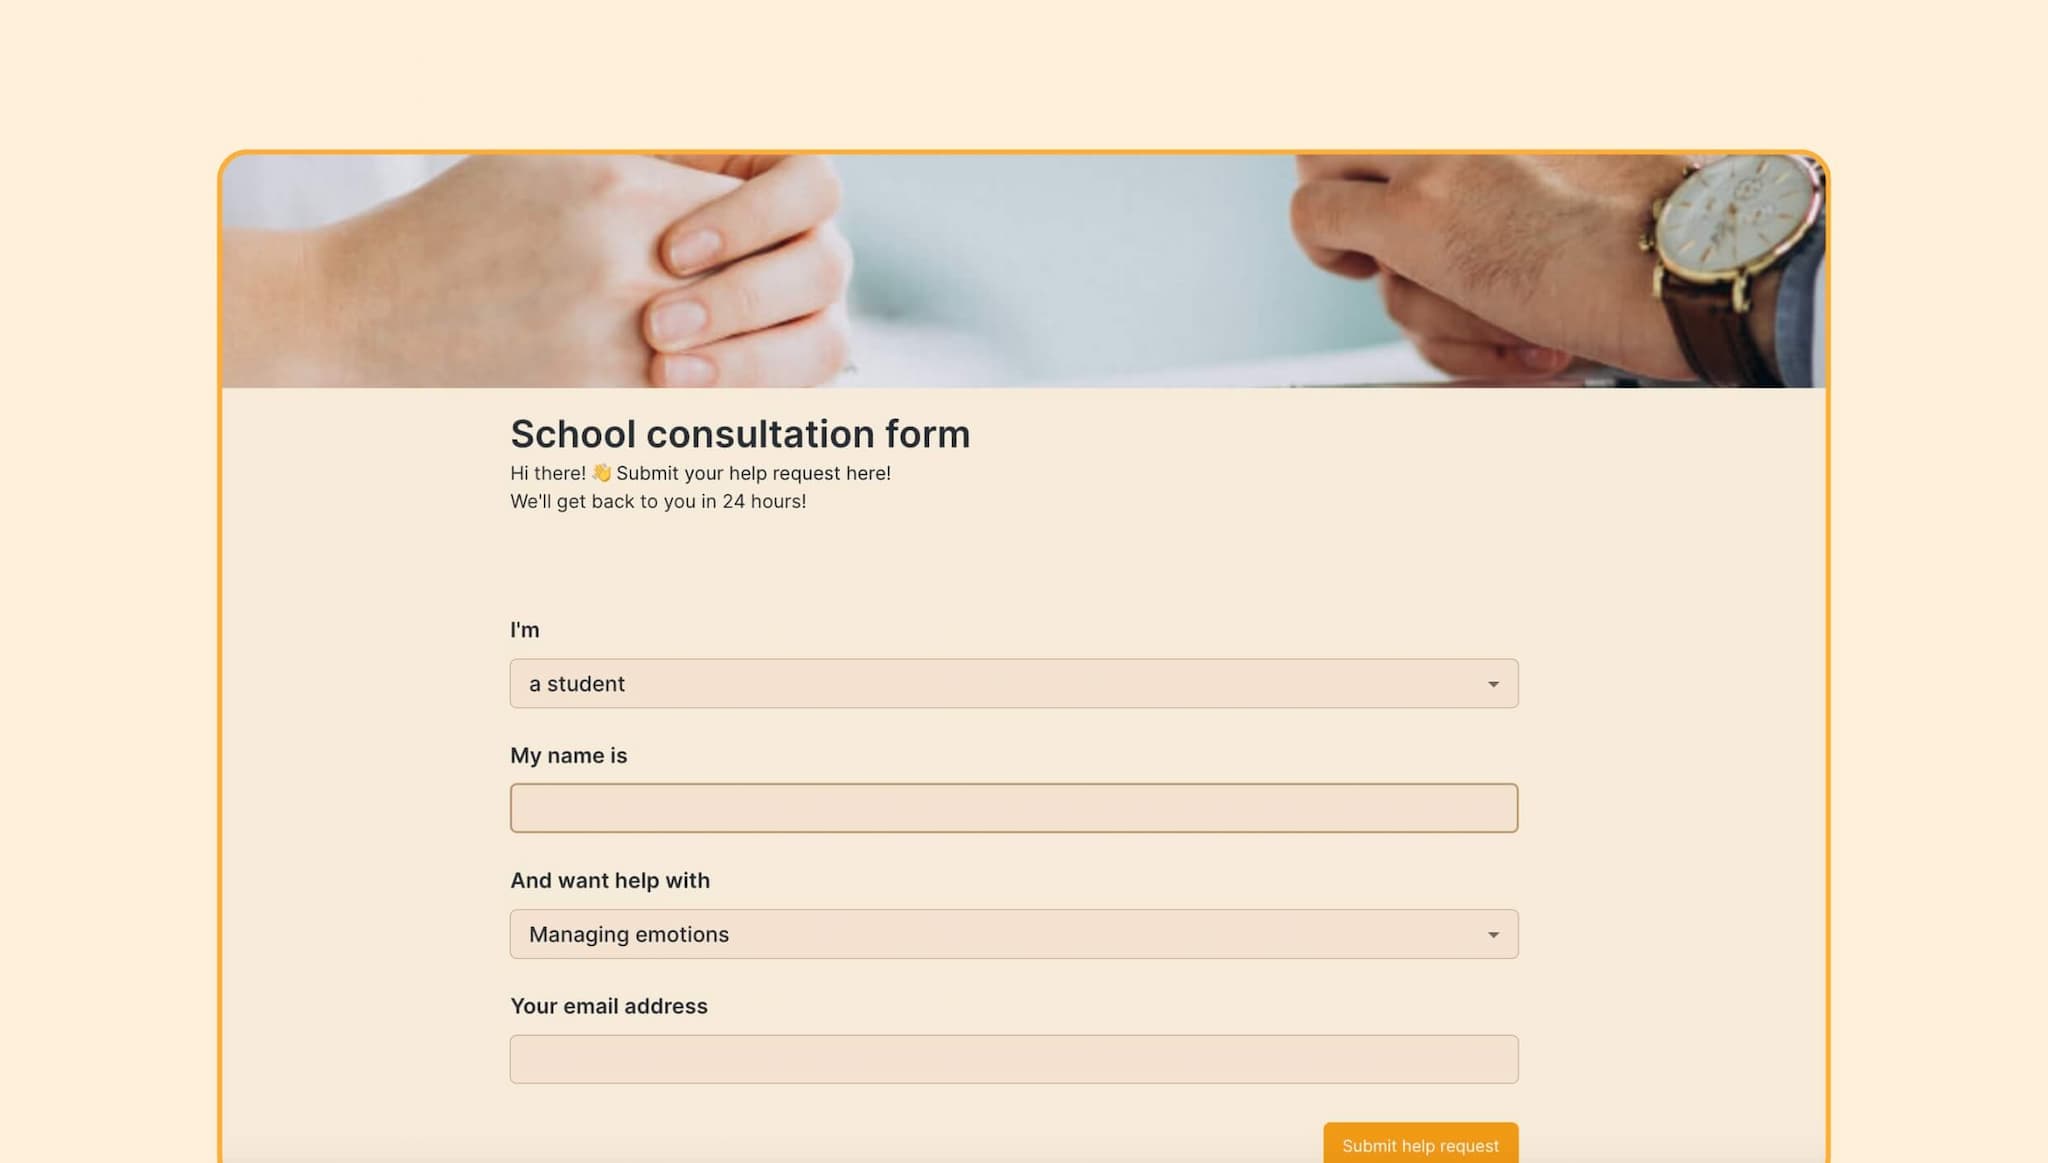 School consultation form